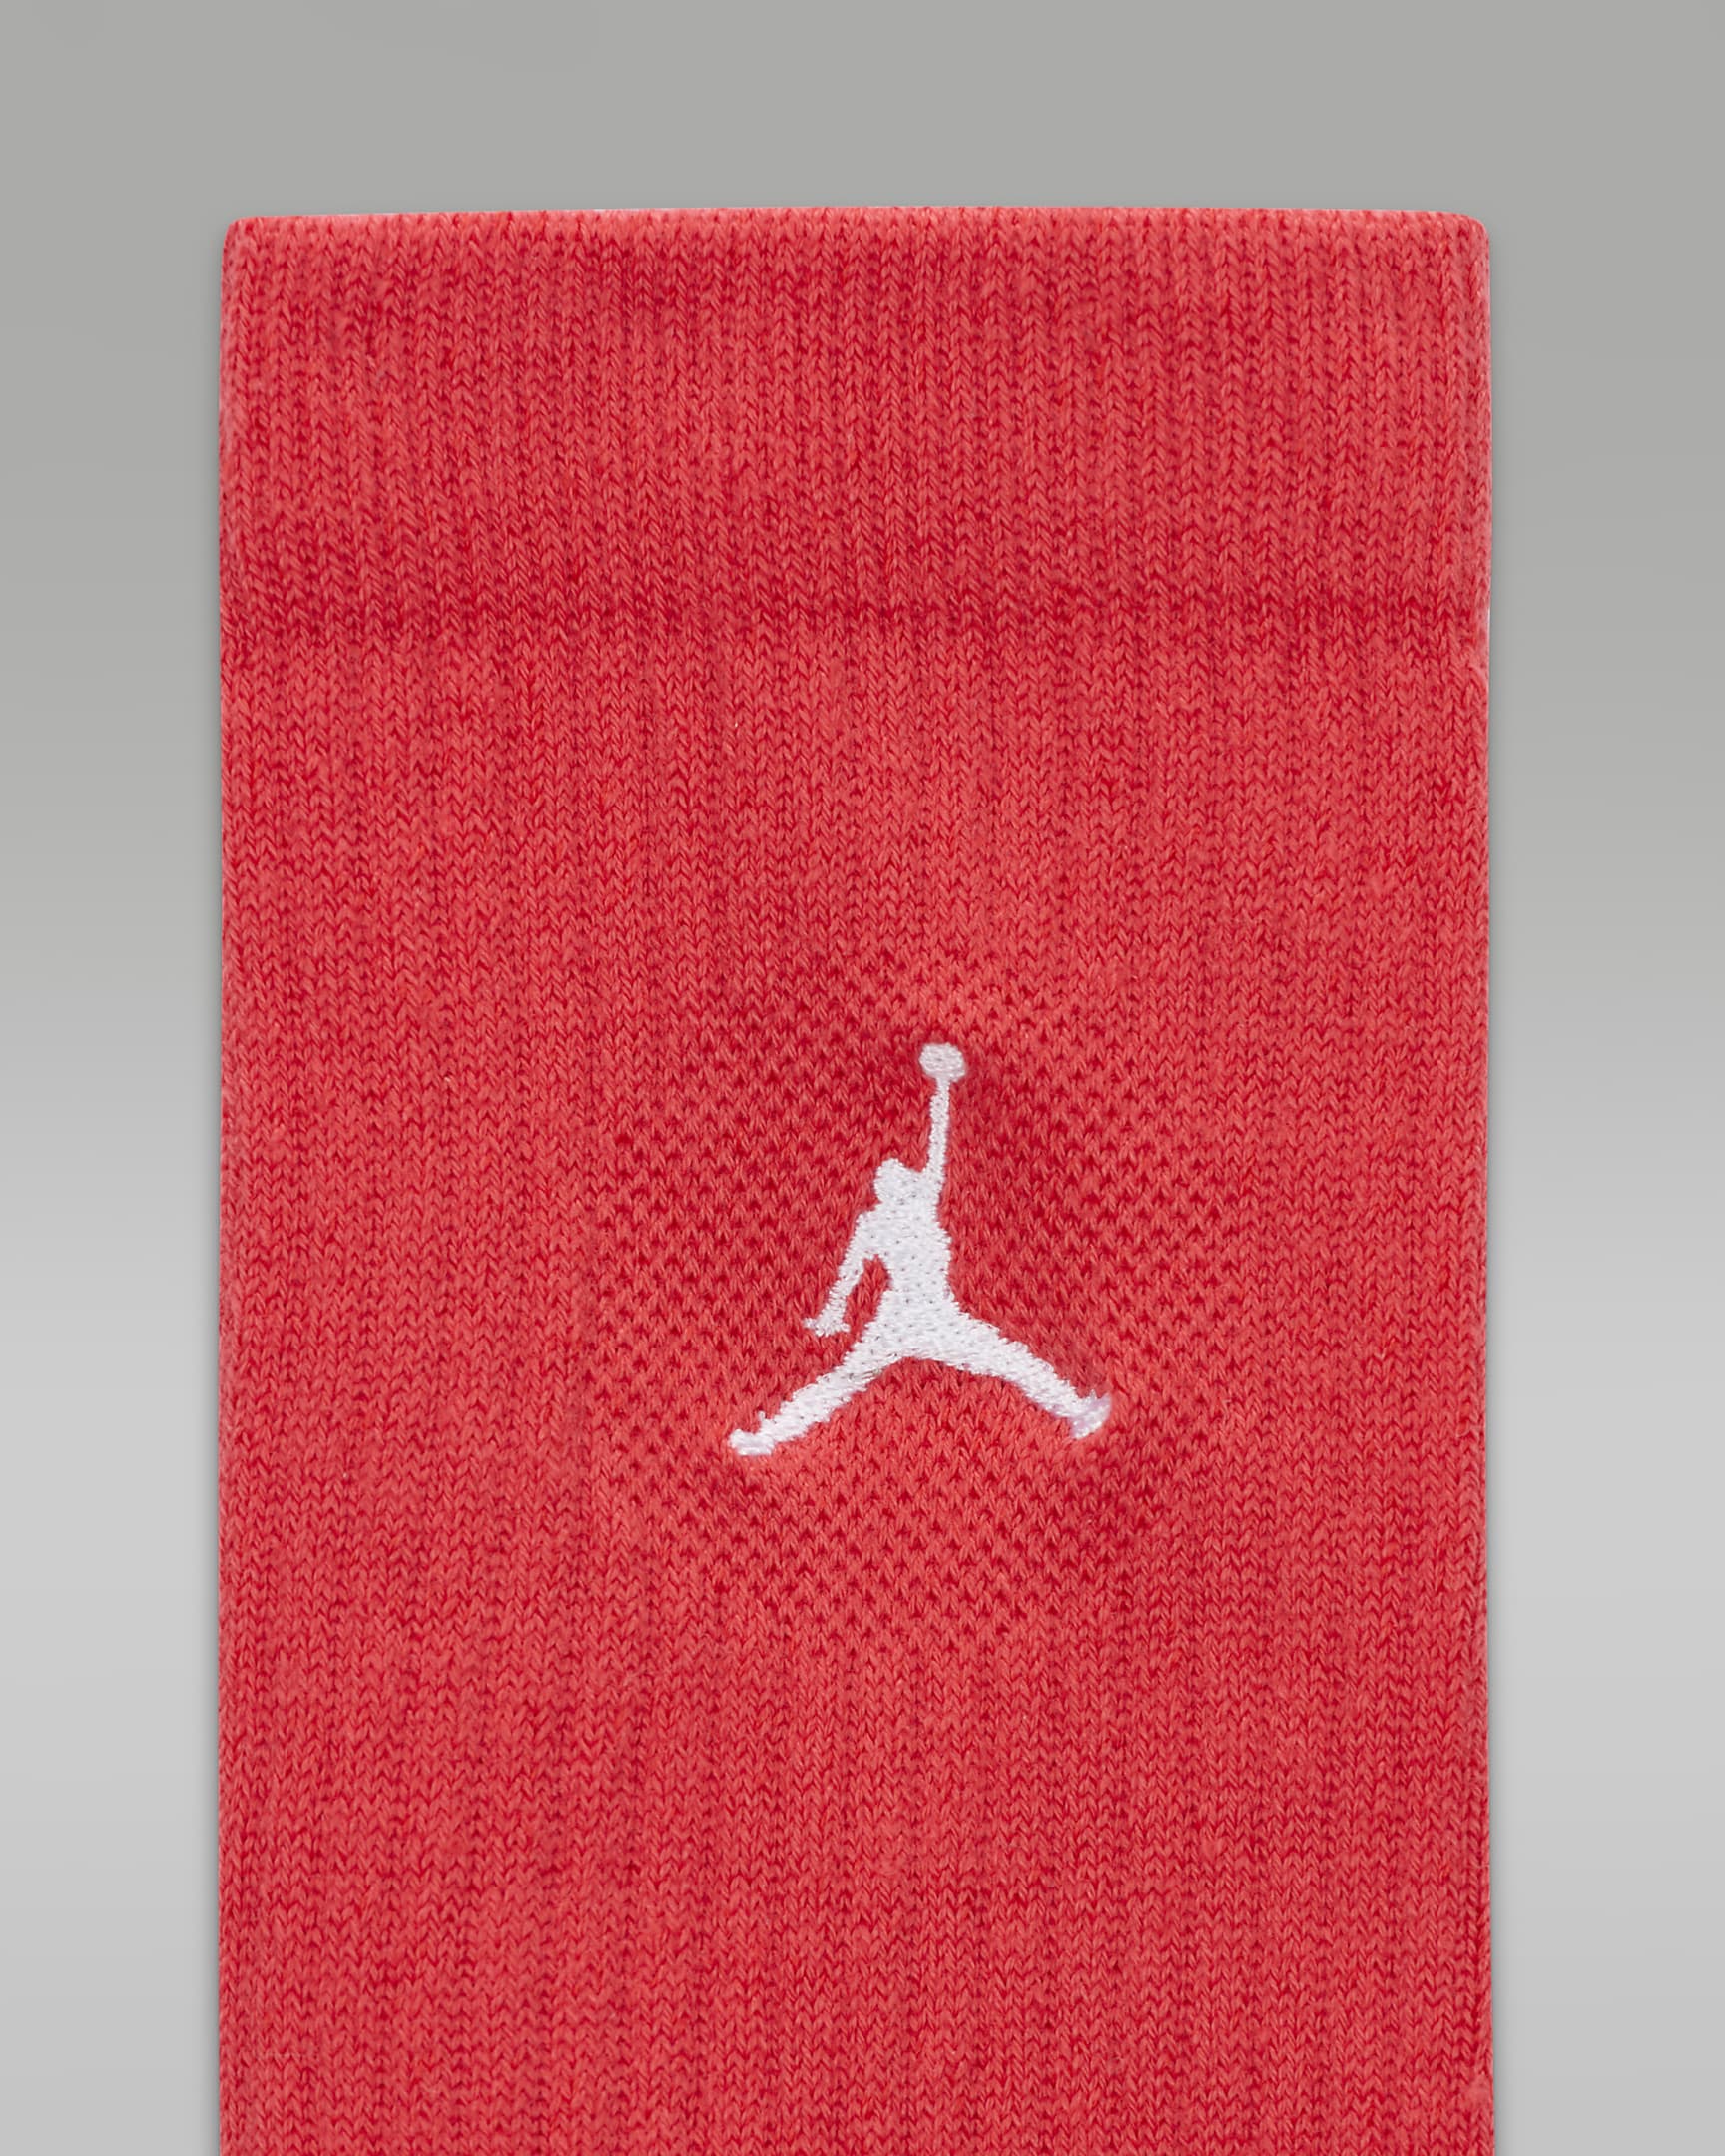 Jordan Everyday Crew Socks (3 pairs). Nike UK